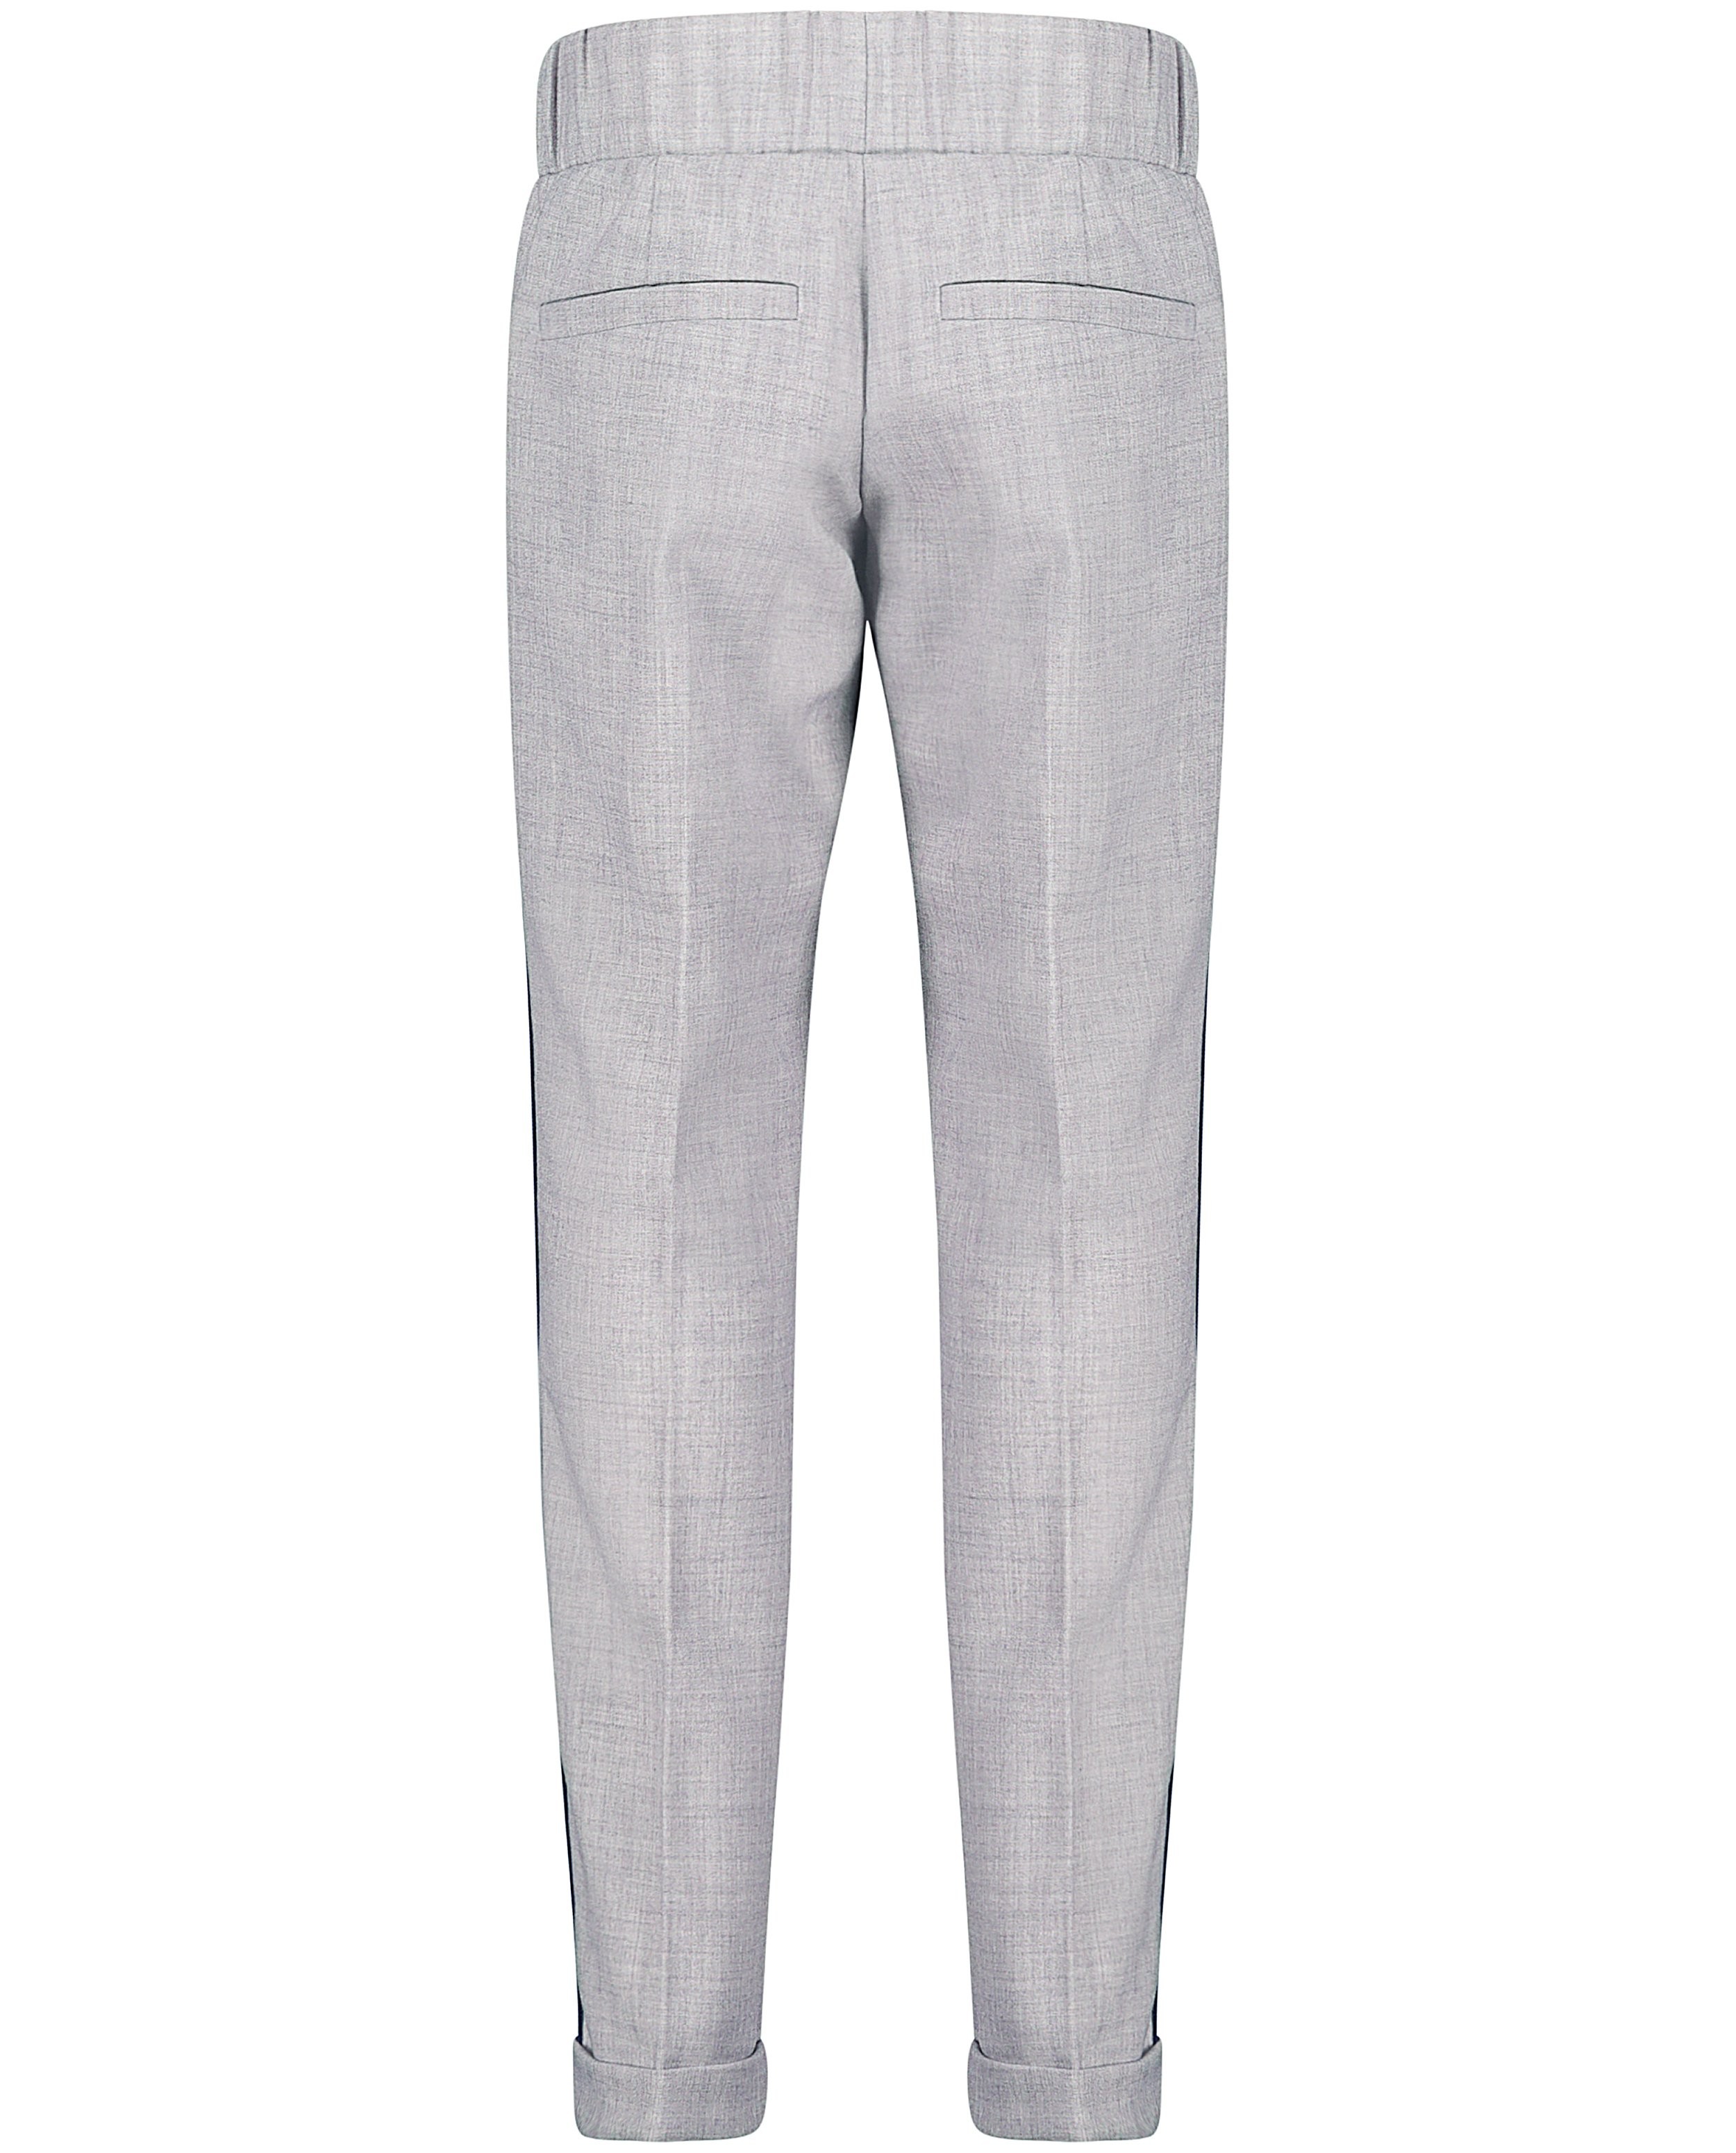 Pantalons - Pantalon gris clair